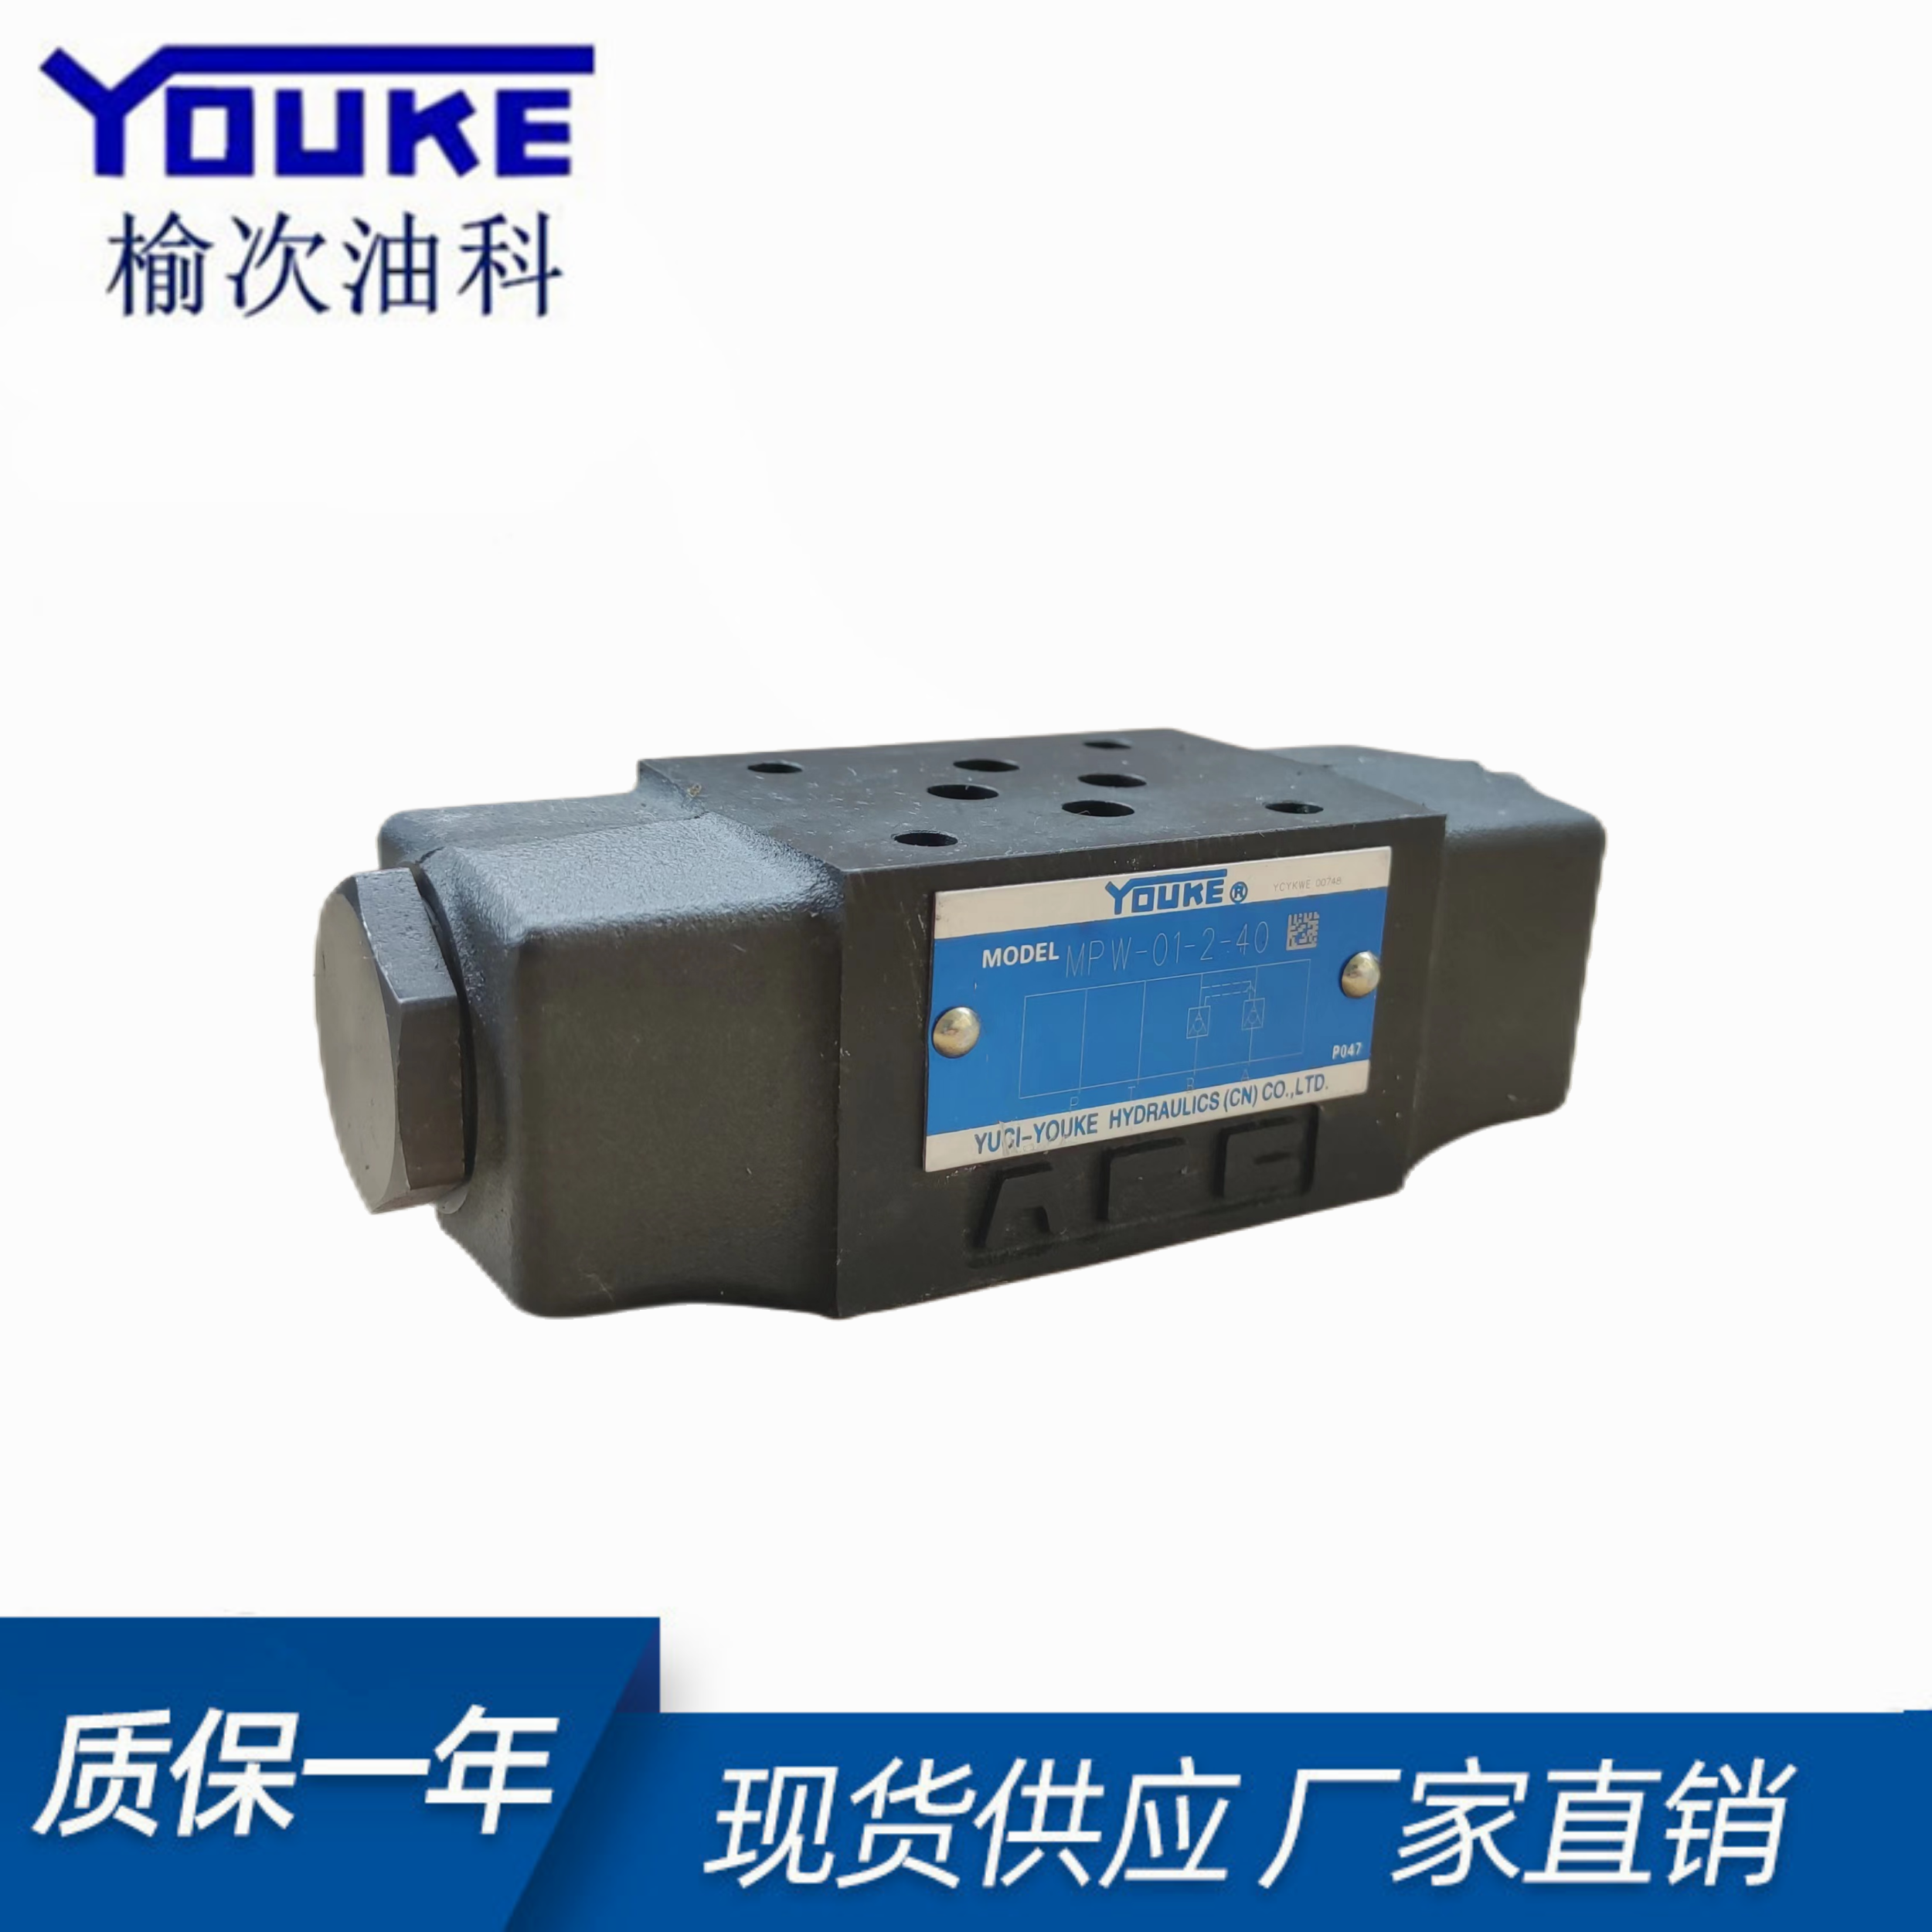 YUKEN油研系列叠加式液控单向阀 保压阀 MPW/MPA/MPB-01-2-40 - 图1